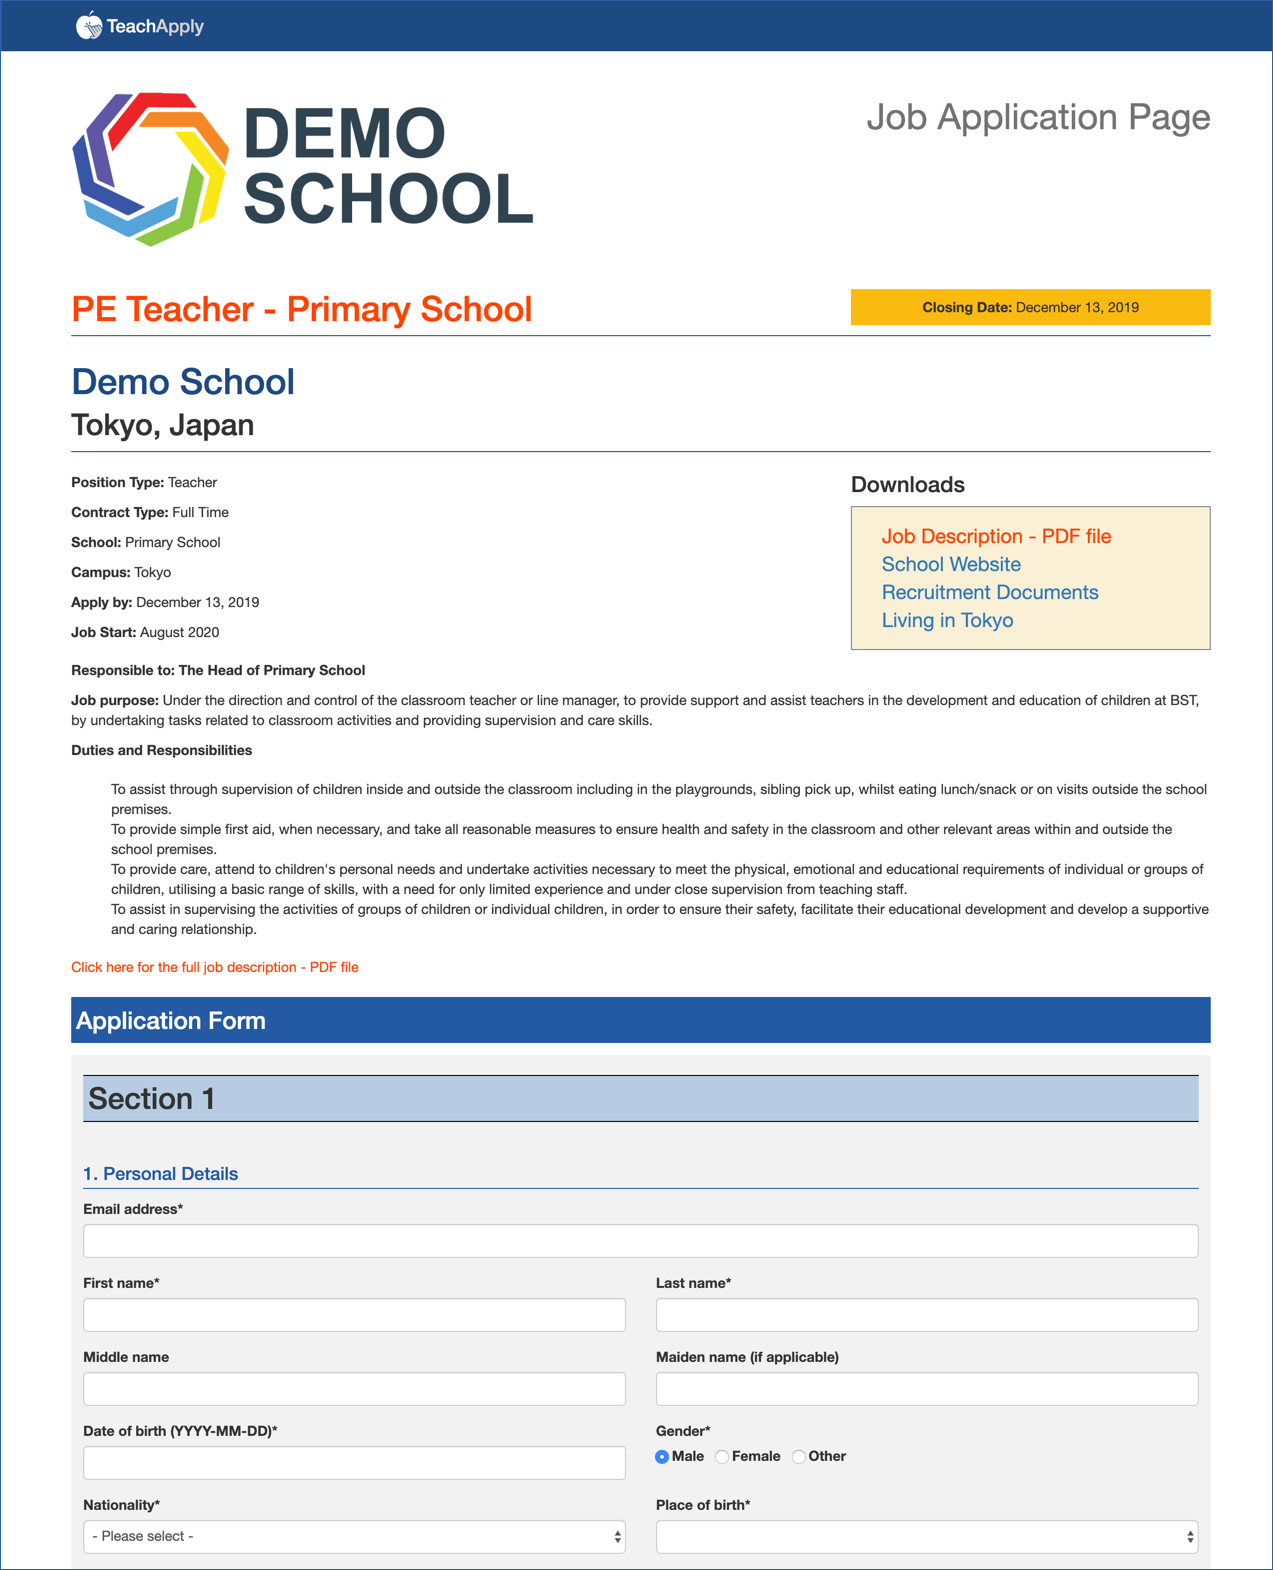 TeachApply Job Application Page for Demo School